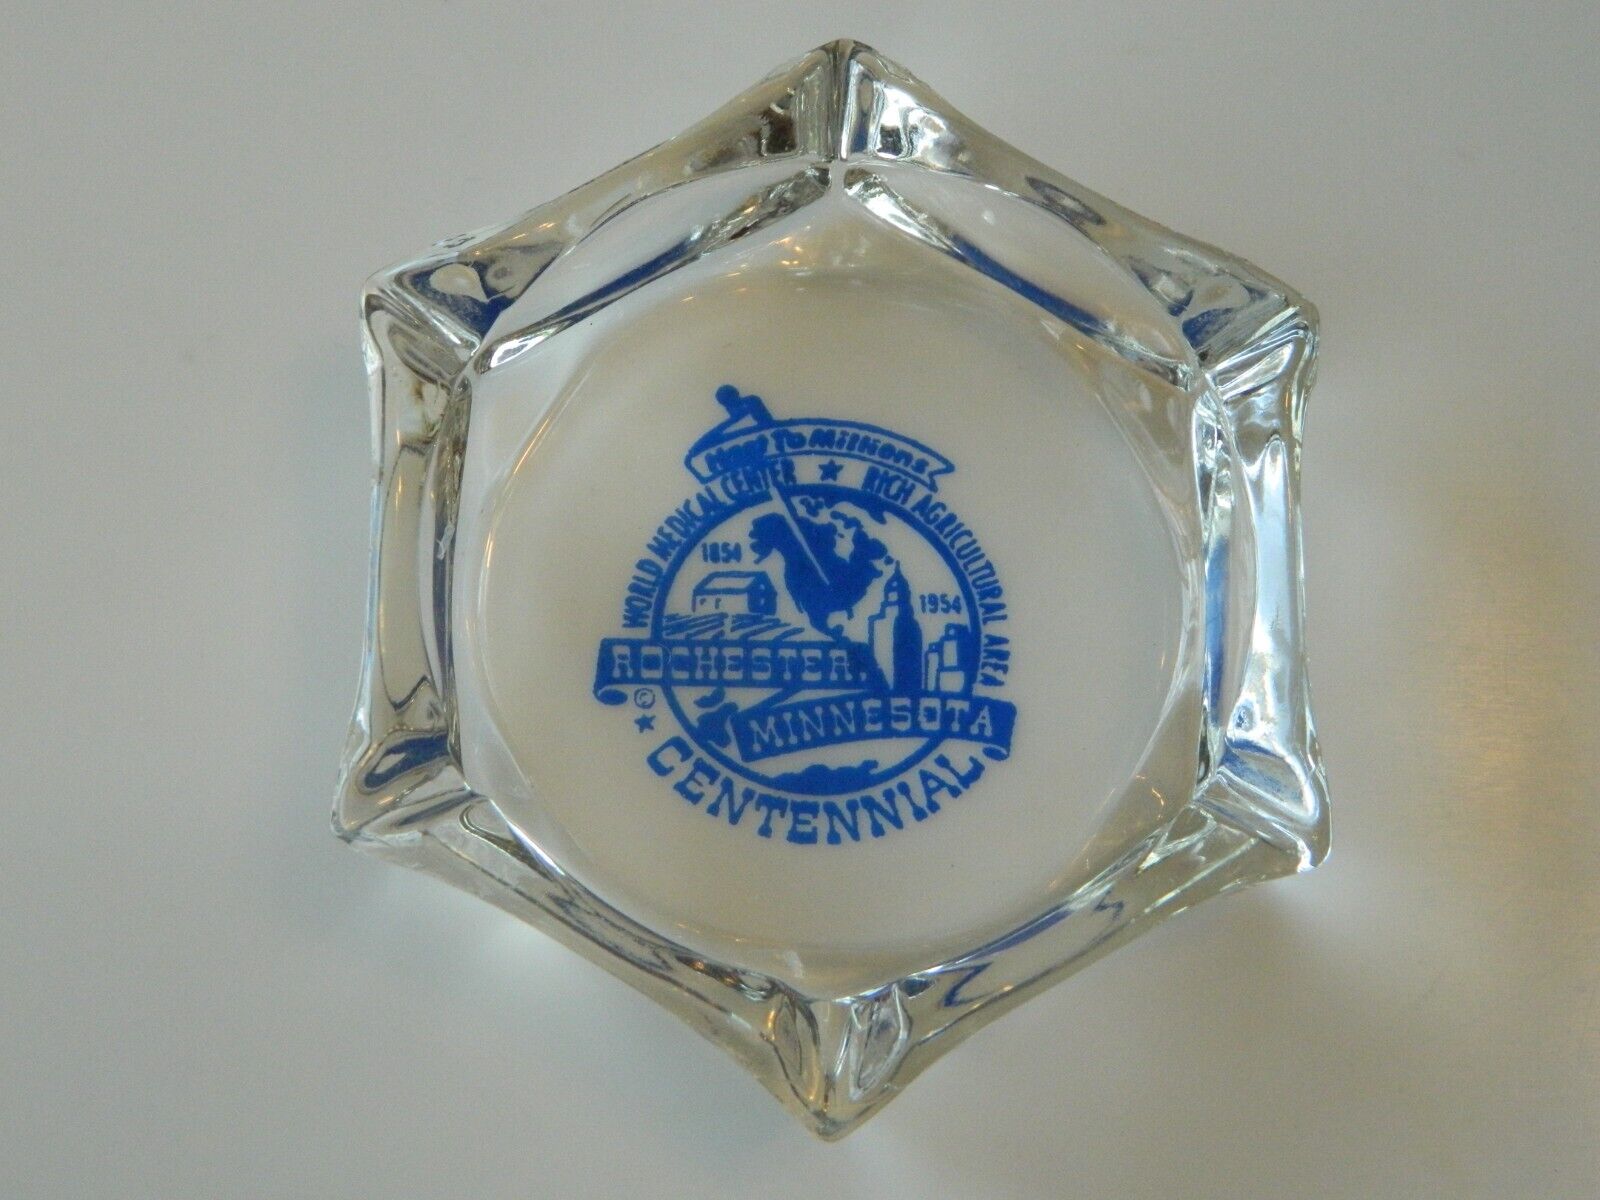 1854 - 1954 Rochester Minnesota Centennial Glass Ashtray